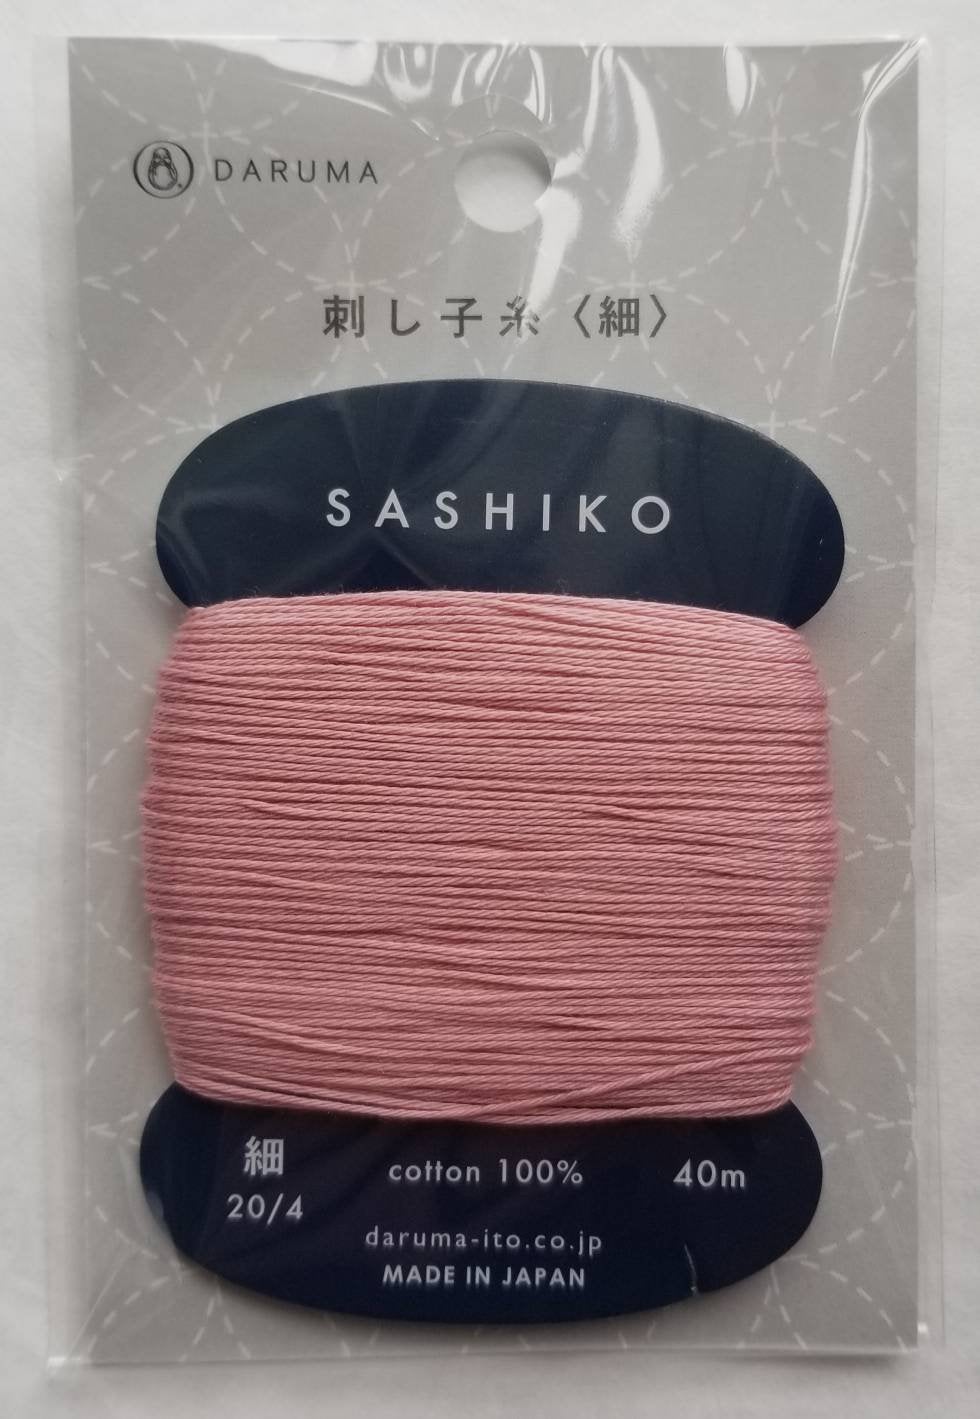 Daruma #211 PLUM BLOSSOM Japanese Cotton SASHIKO thread 40 meter skein 20/4 こうばい blossom pink